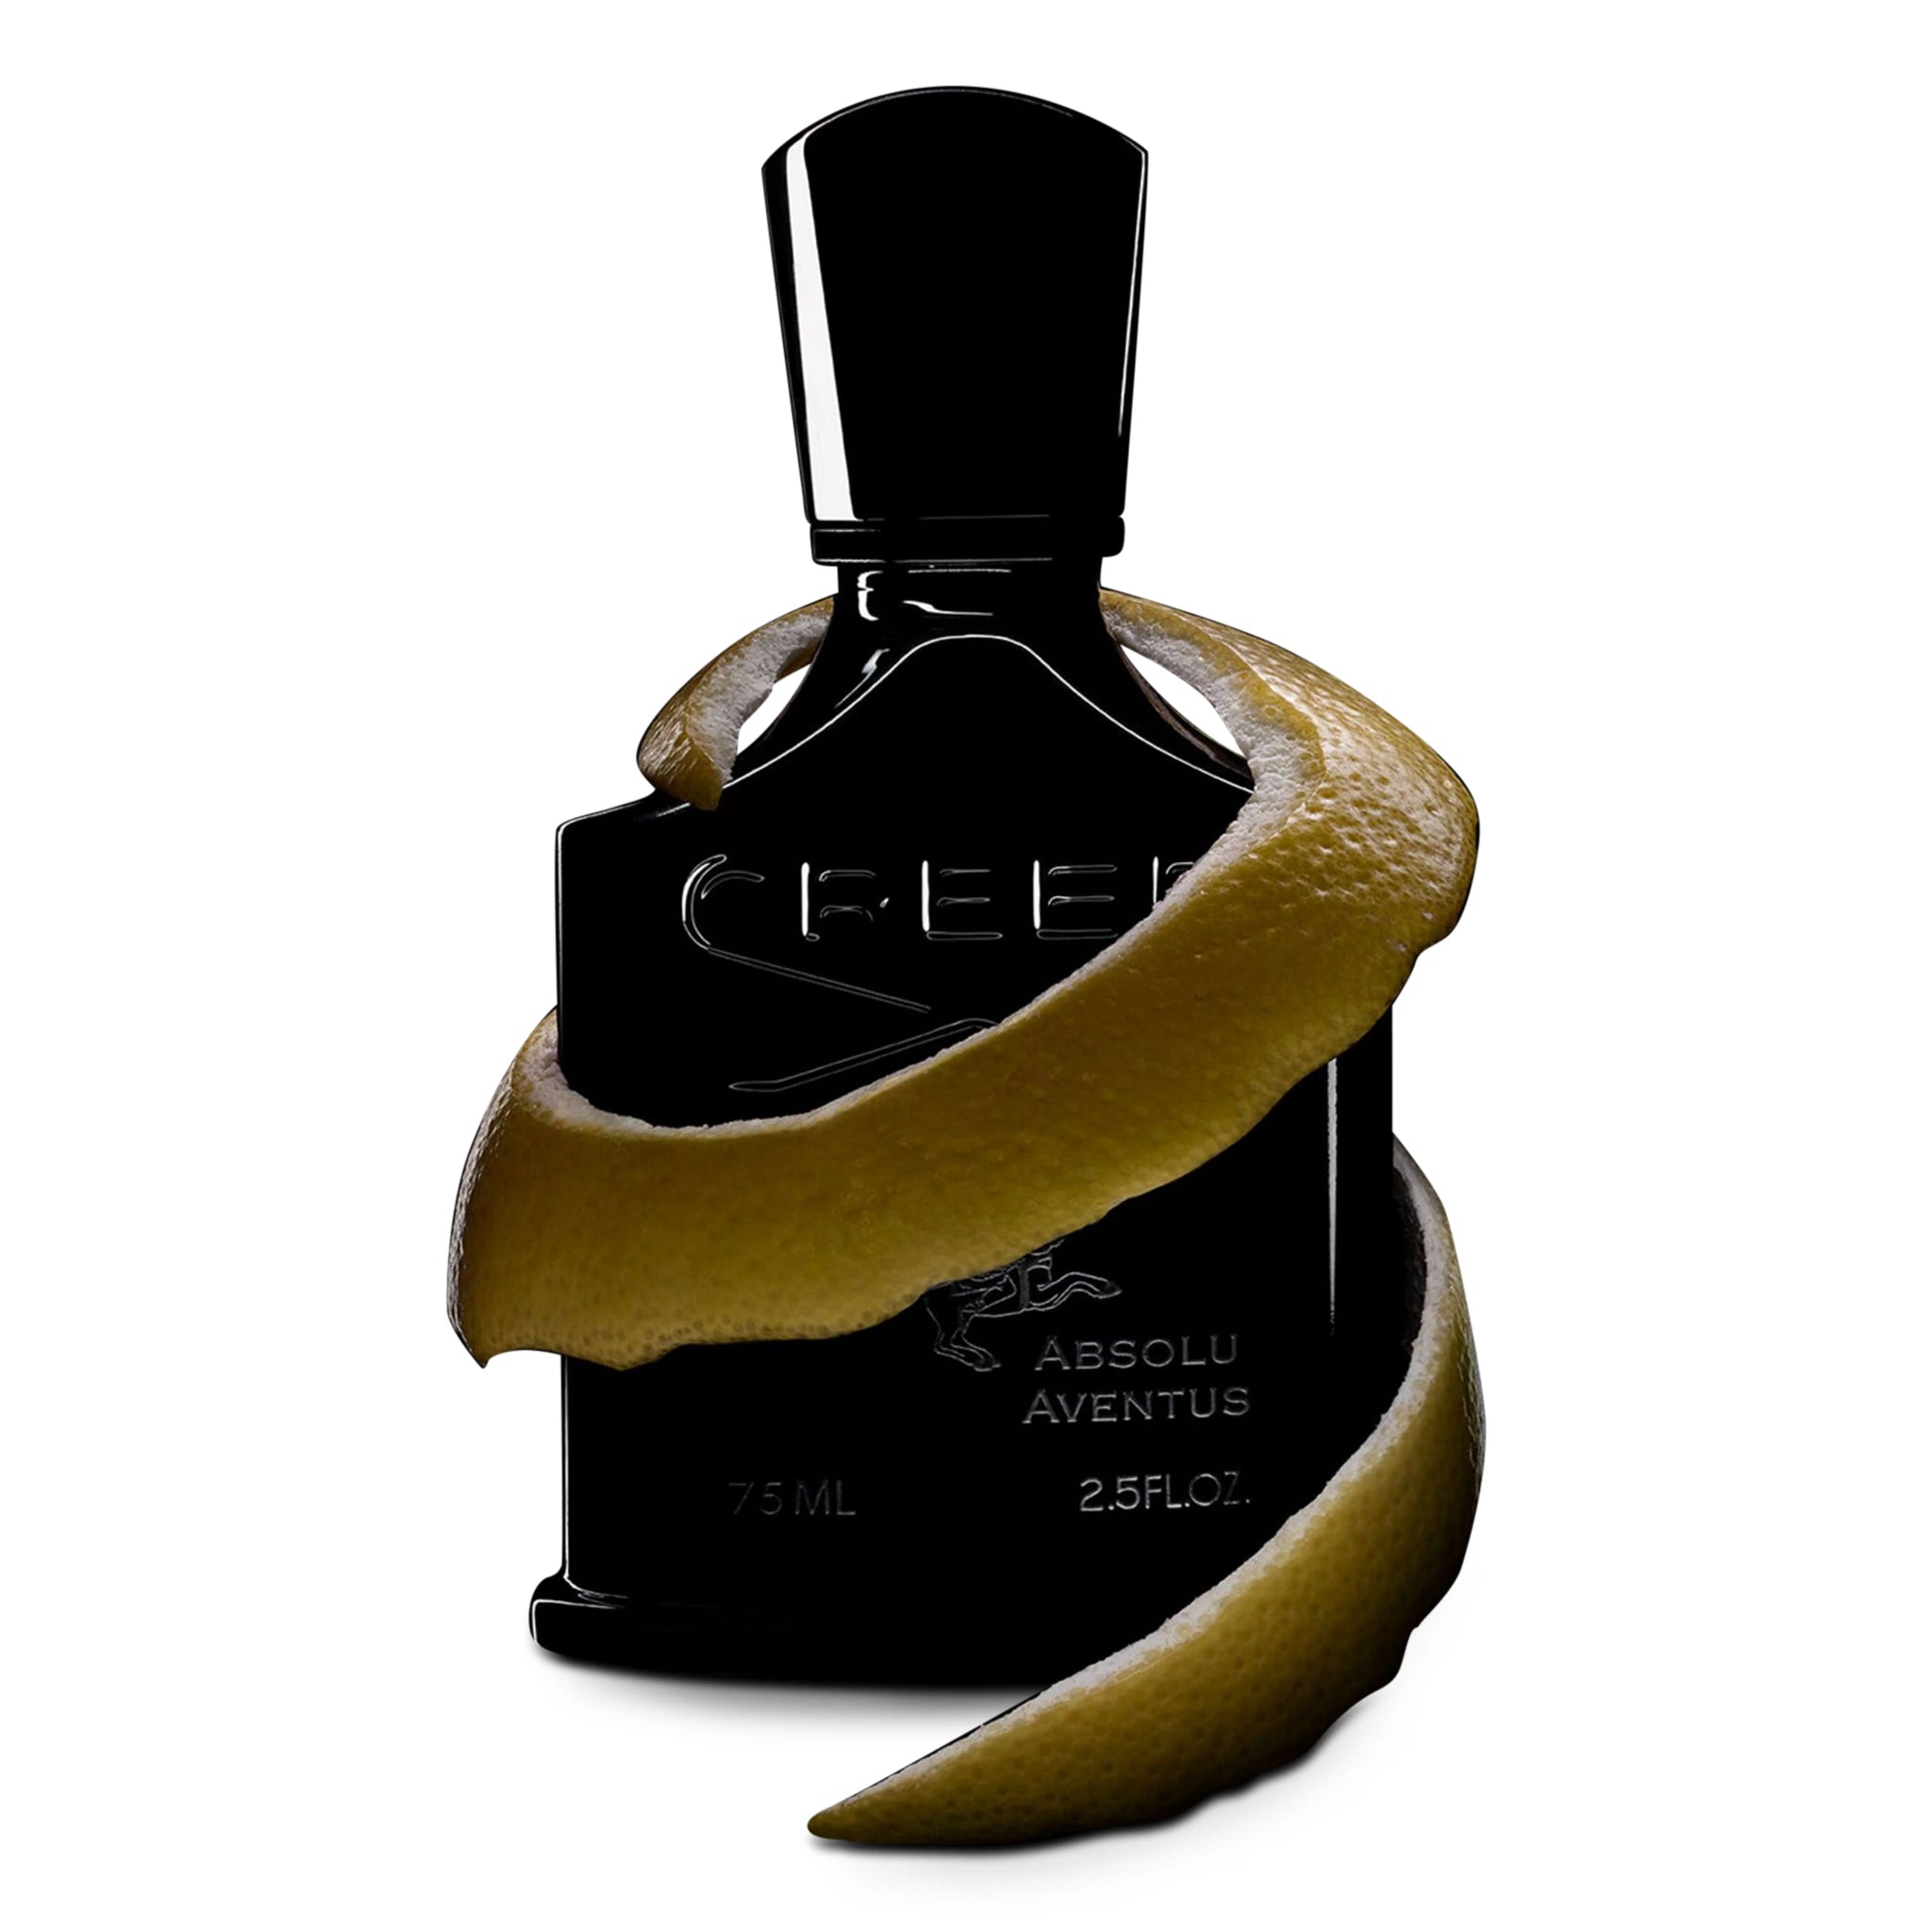 Packaging view of Creed Limited Edition Absolu Aventus Eau De Parfum 75ml